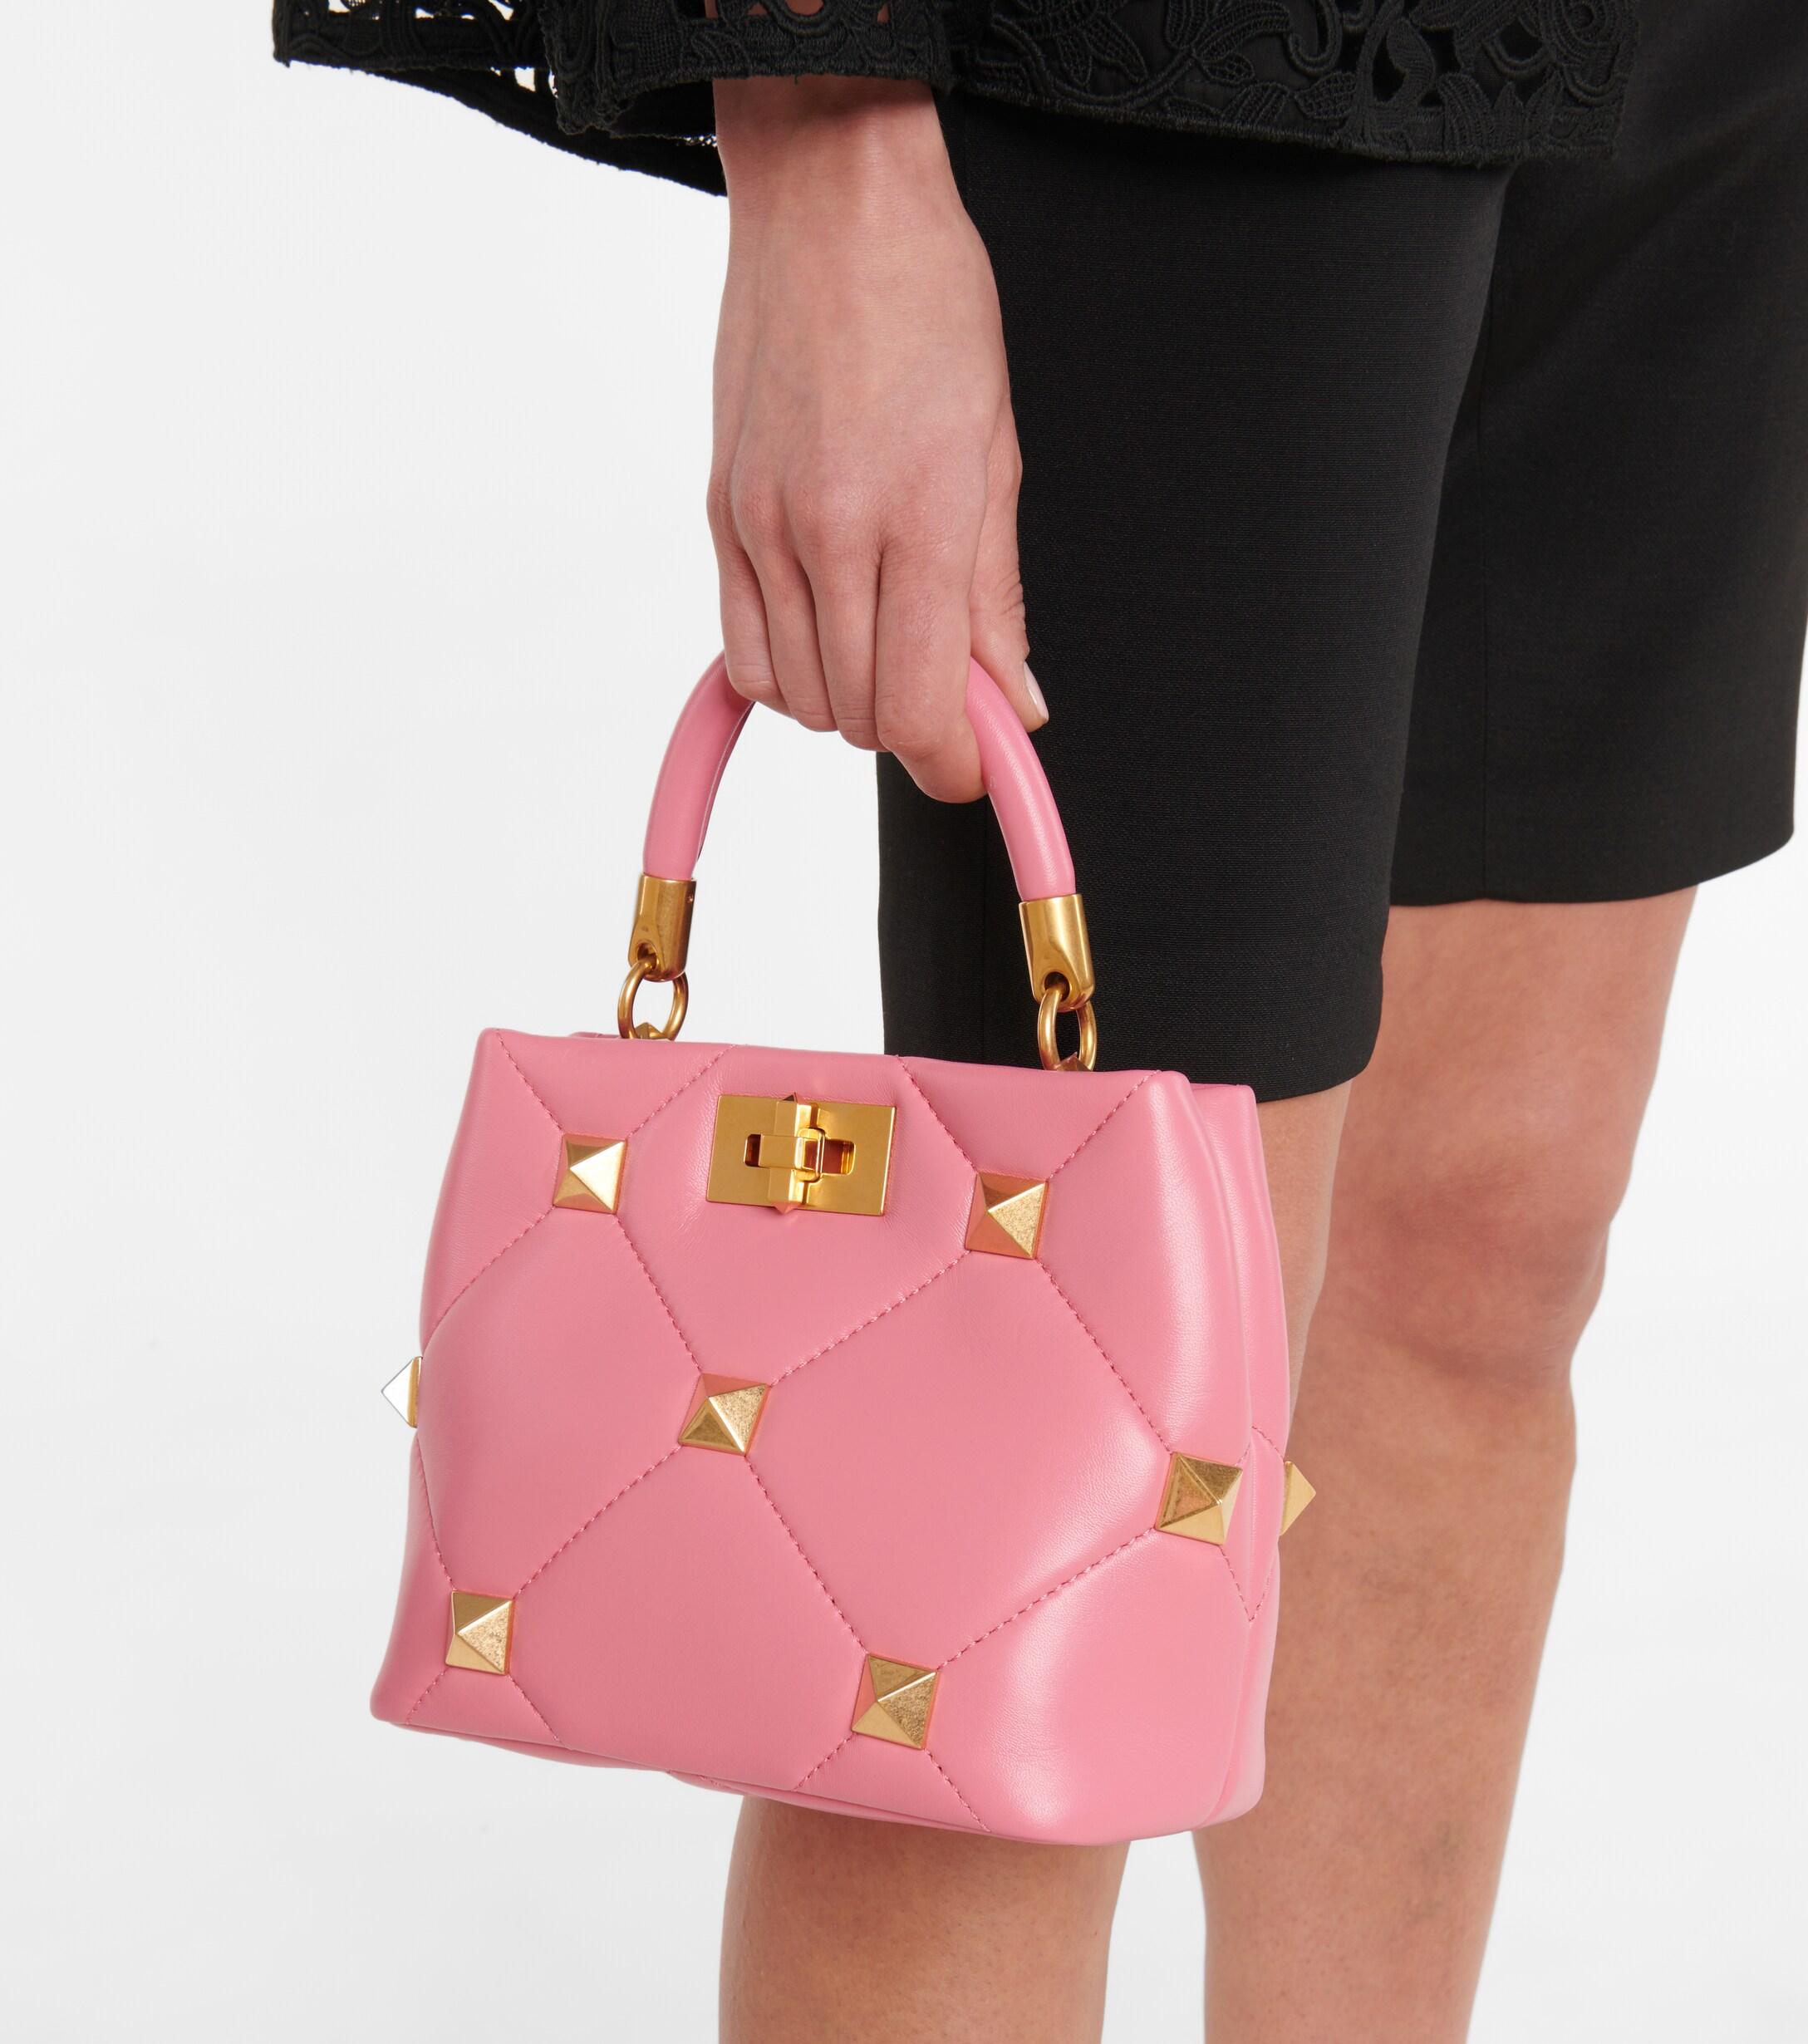 Valentino Garavani Roman Stud Small Leather Shoulder Bag in Pink - Lyst